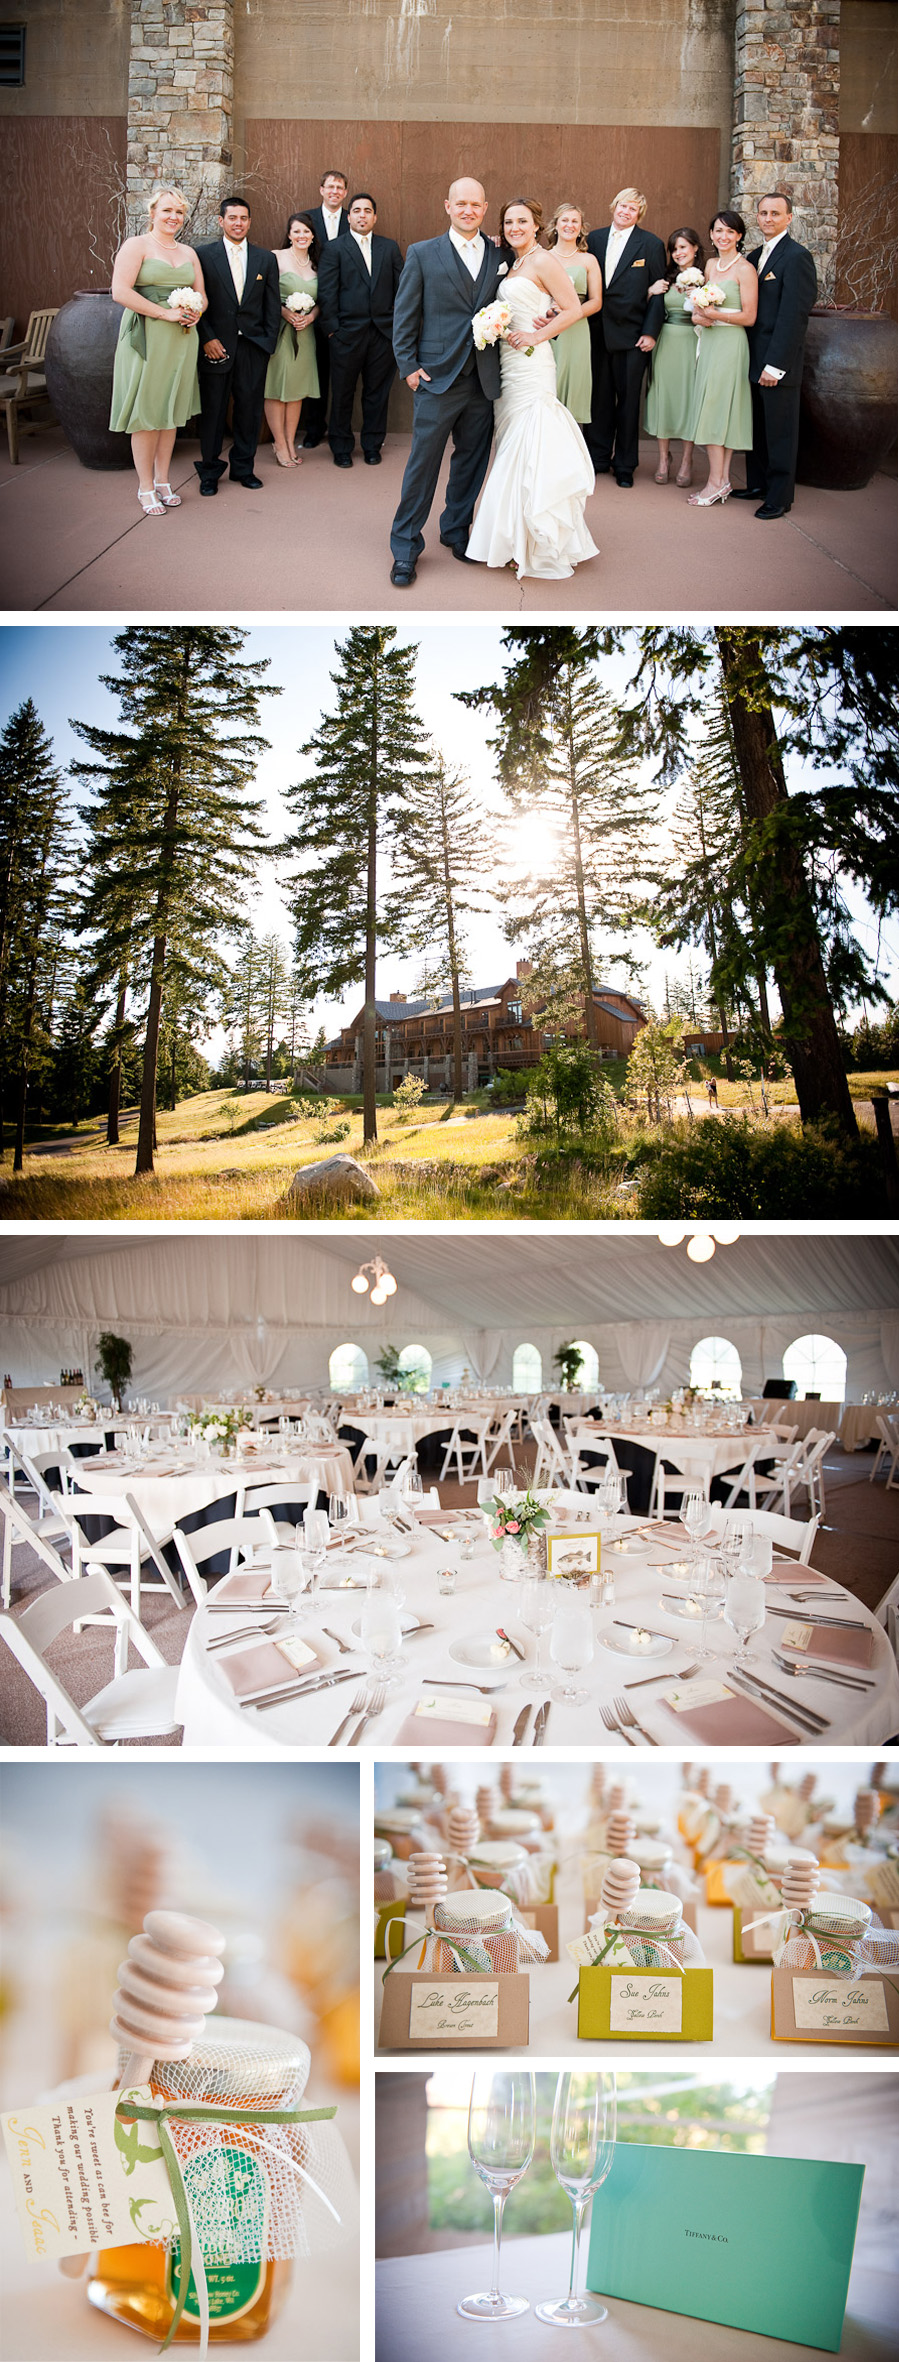 Detail shots of Suncadia wedding reception on the blog.